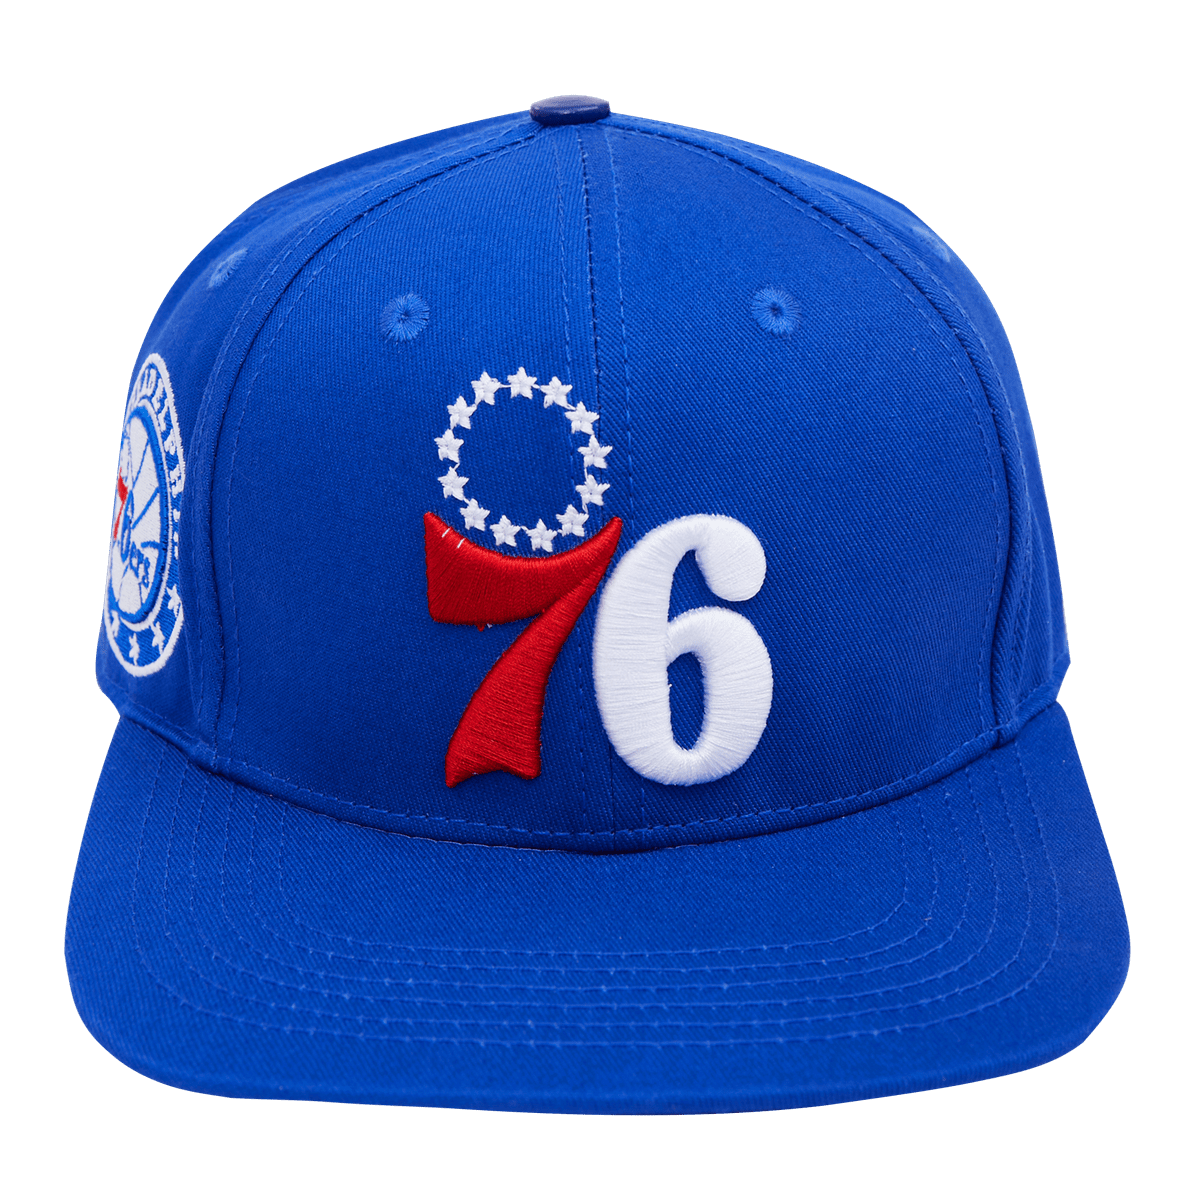 NBA PHILADELPHIA 76ERS CLASSIC LOGO UNISEX SNAPBACK HAT (ROYAL BLUE)